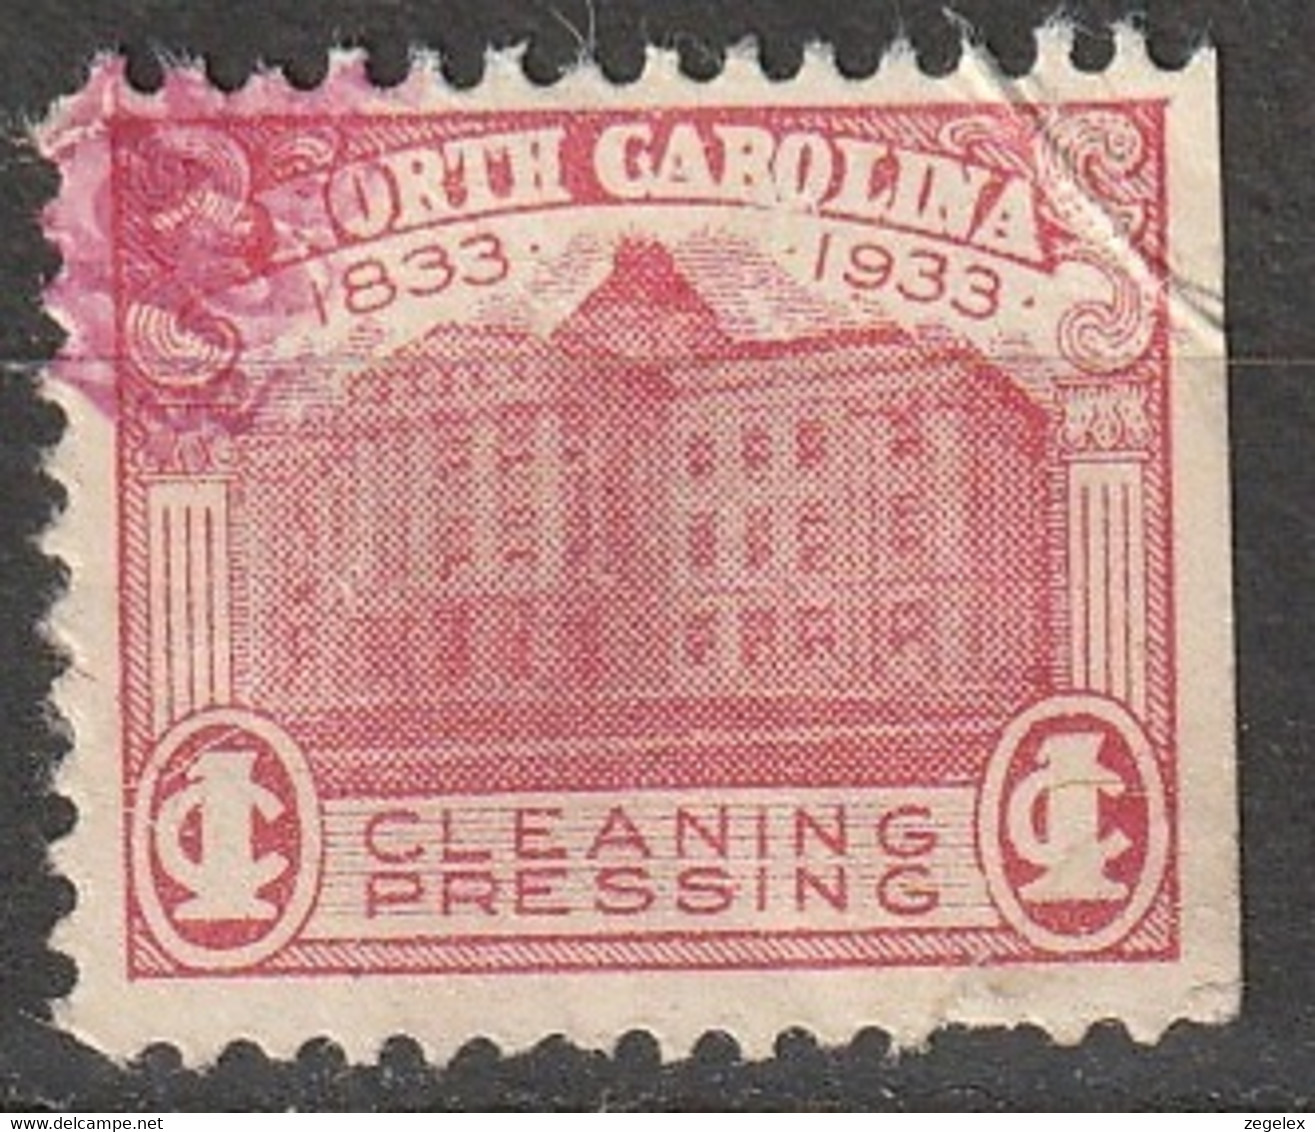 USA 1933 North Carolina Cleaning Pressing 1ct - Revenues